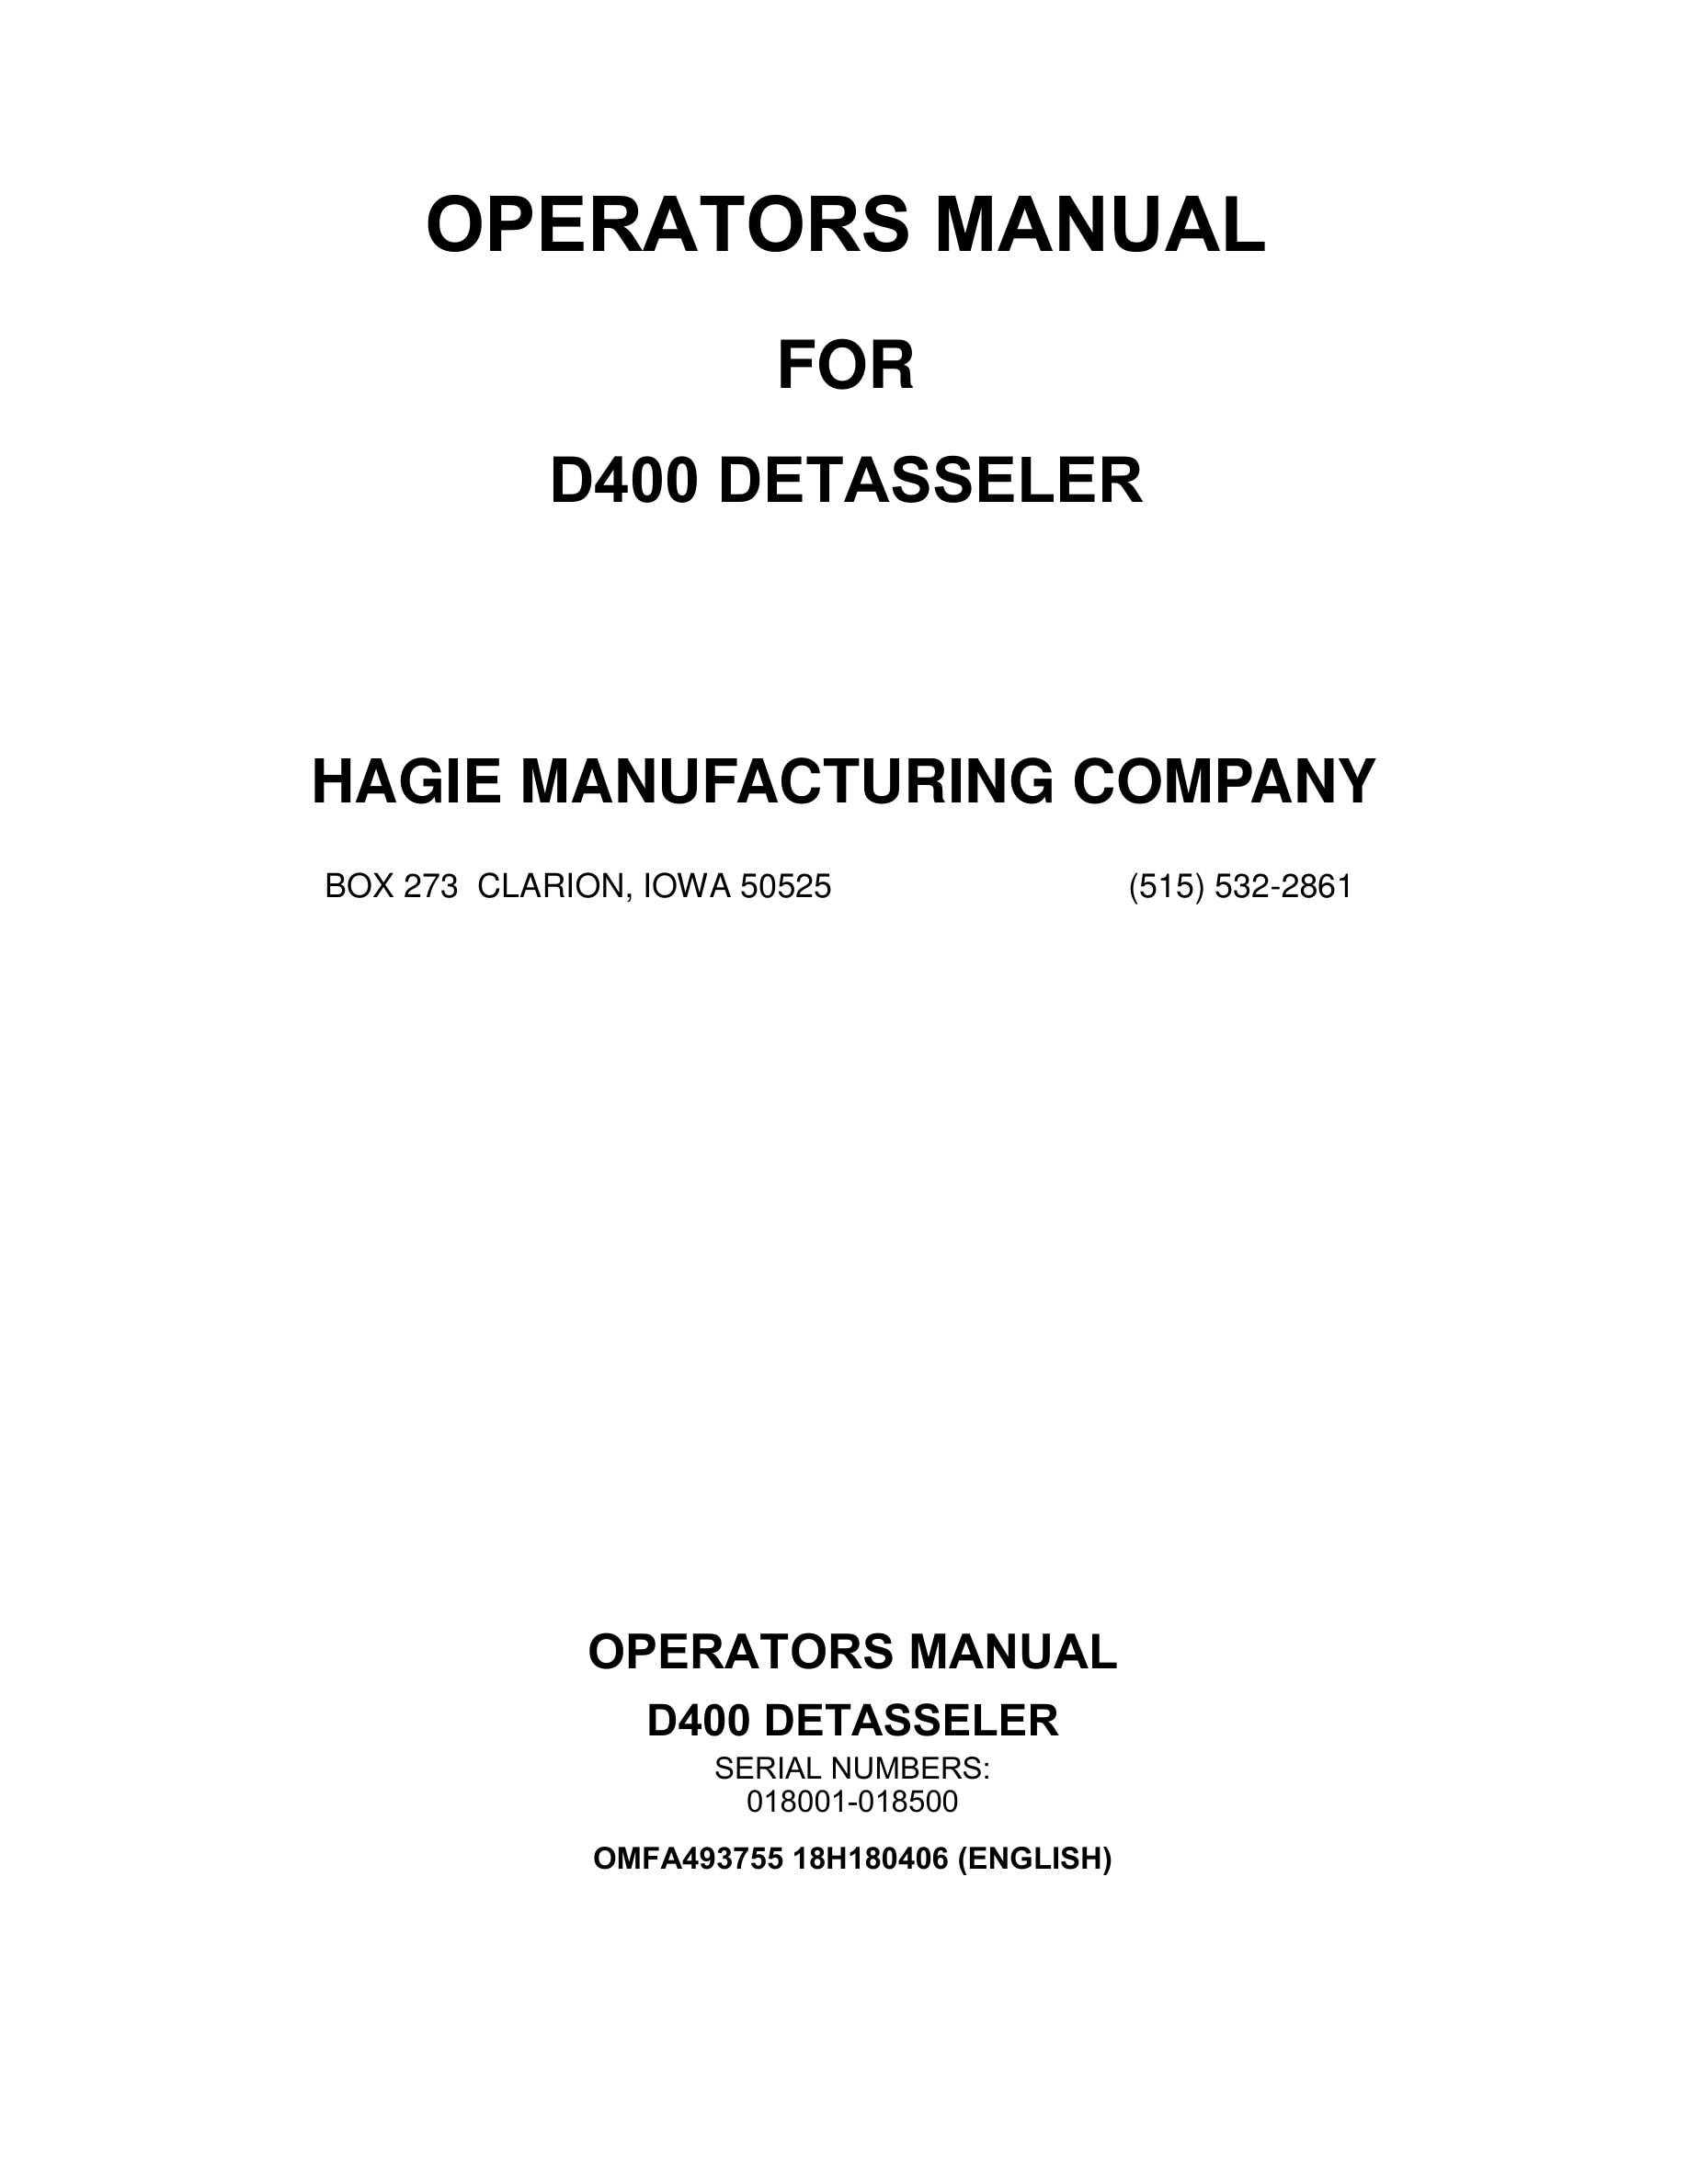 John Deere D400 DETASSELER Operator Manual OMFA493755-1